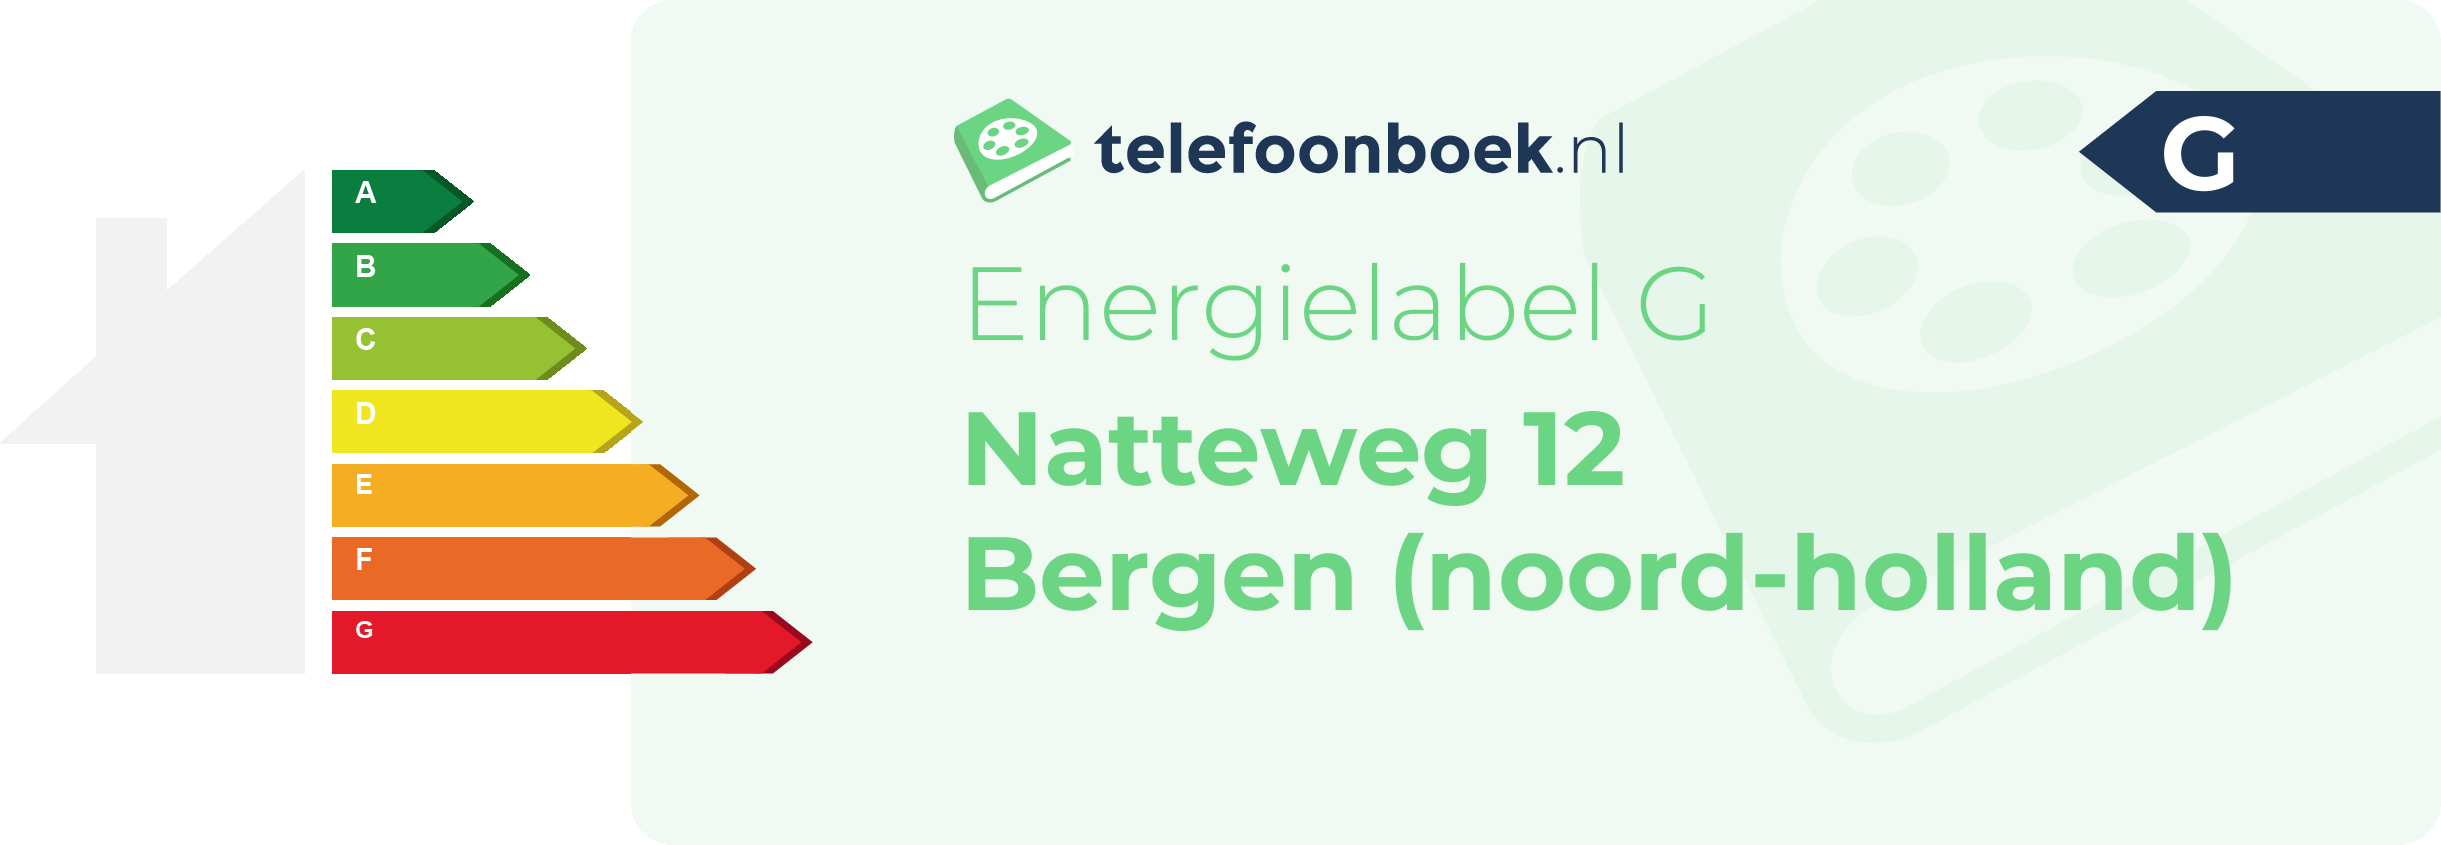 Energielabel Natteweg 12 Bergen (Noord-Holland)